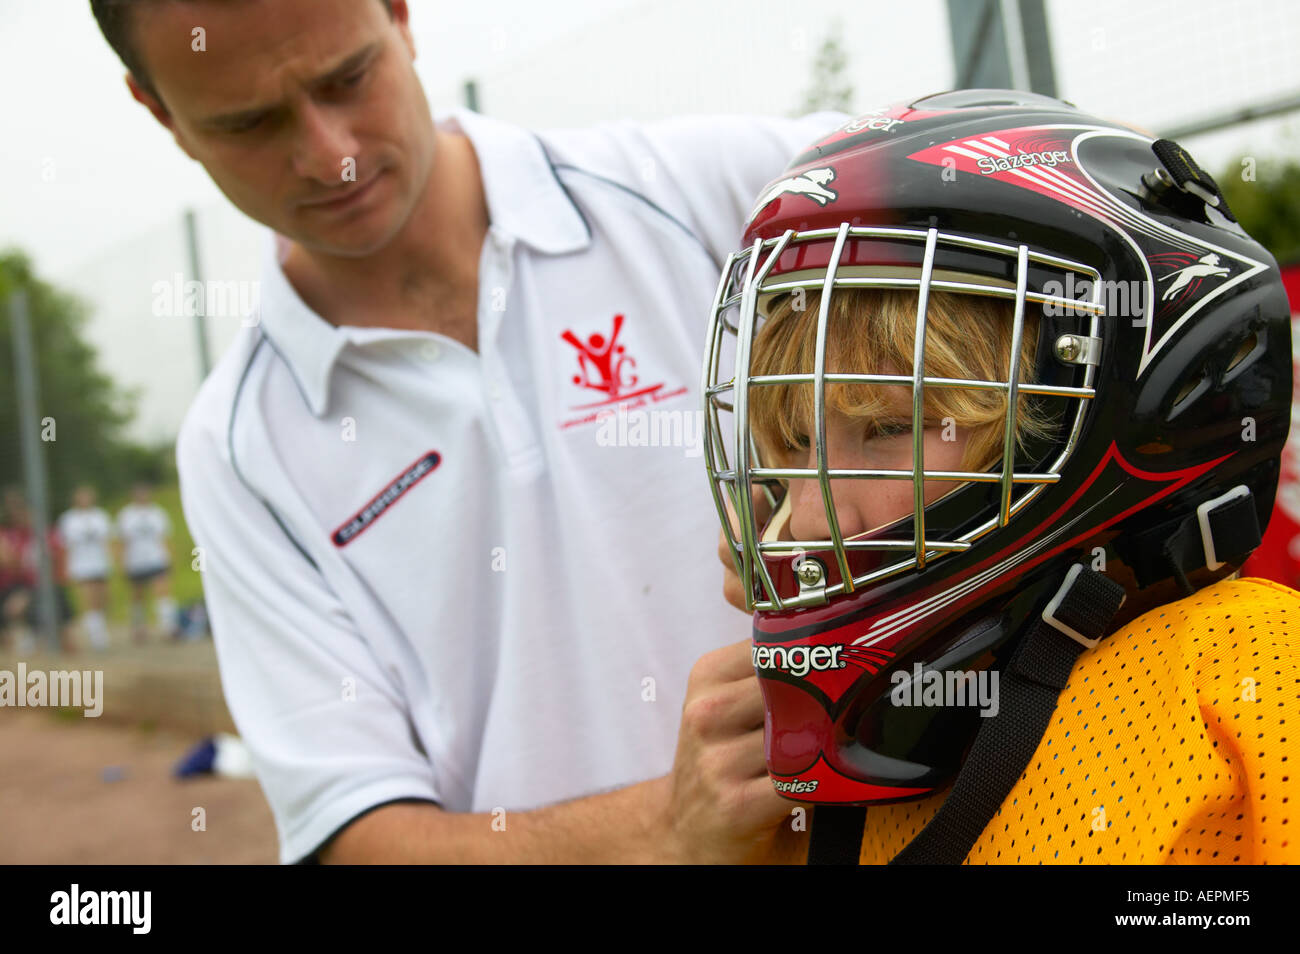 Coach fitting helmet to hockey goalkeeper Stock Photo